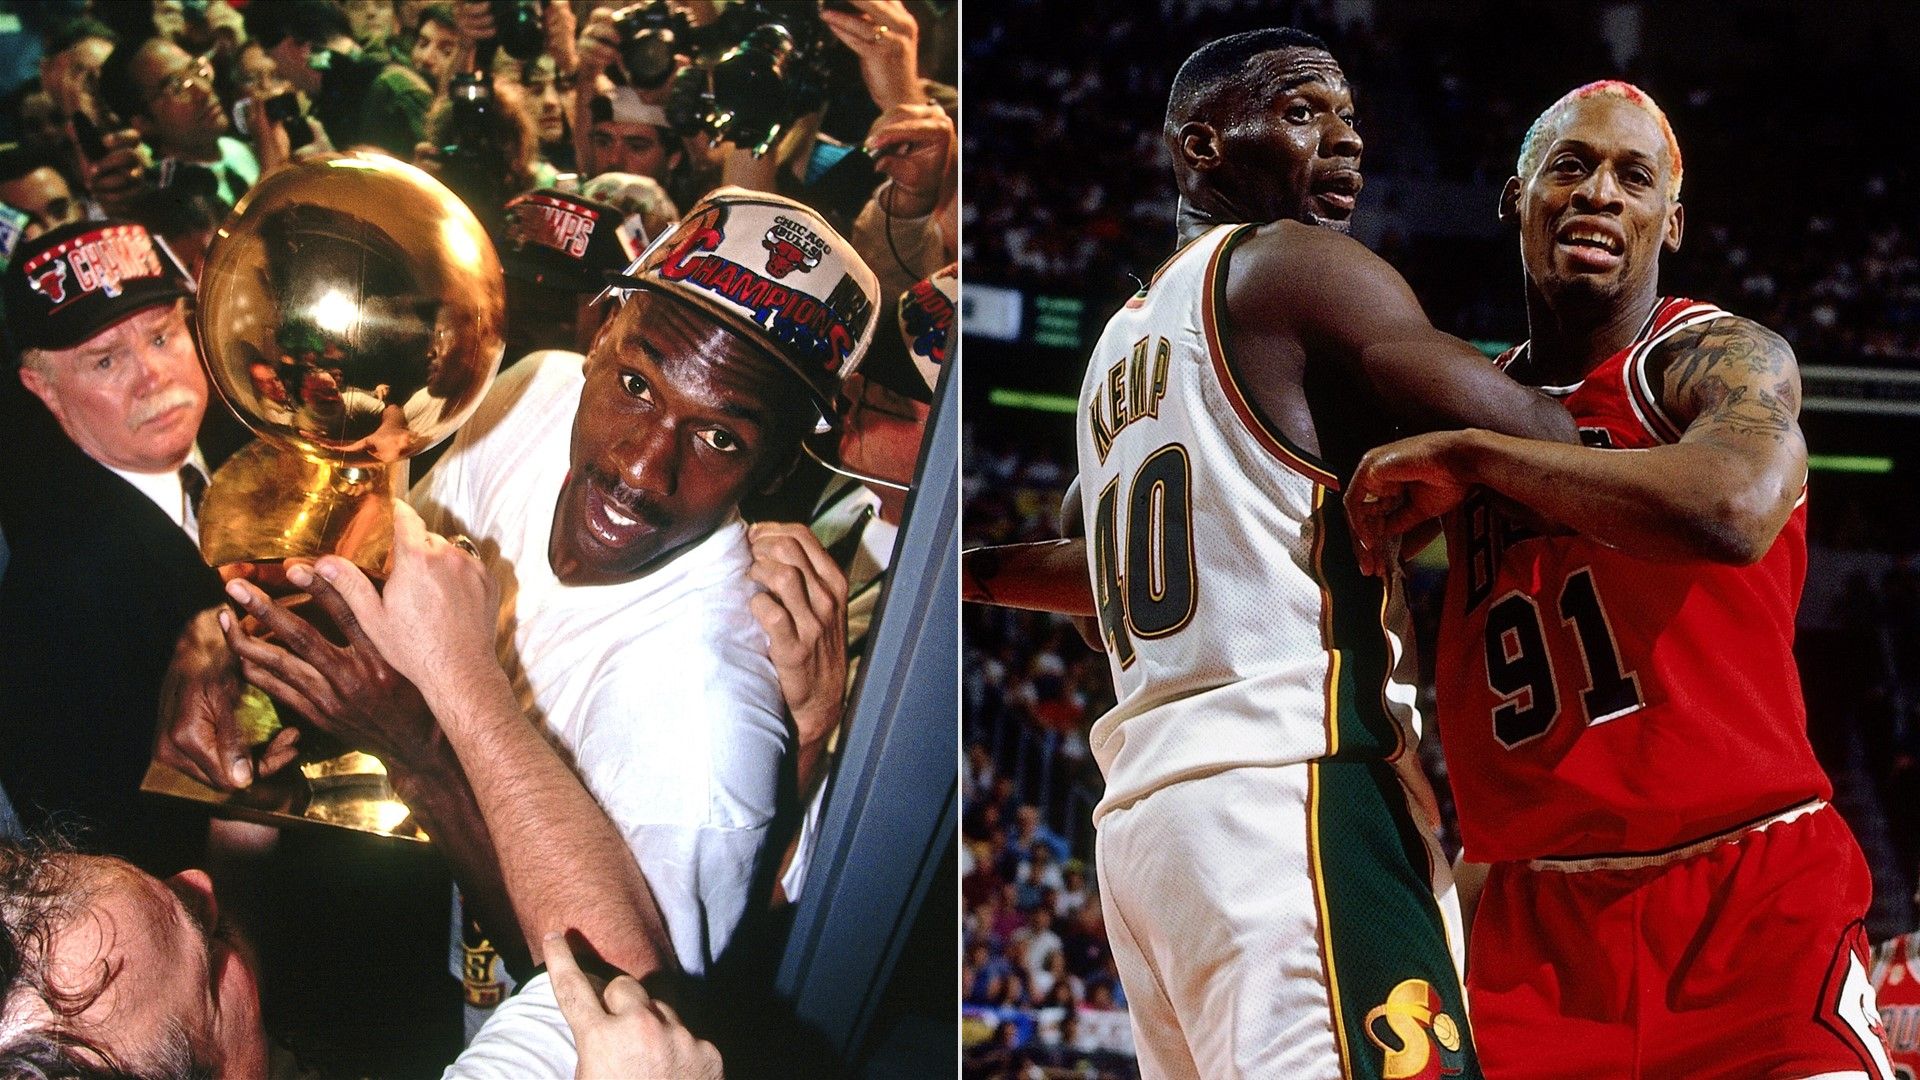 How Shawn Kemp nearly won Finals MVP over Michael Jordan in 1996